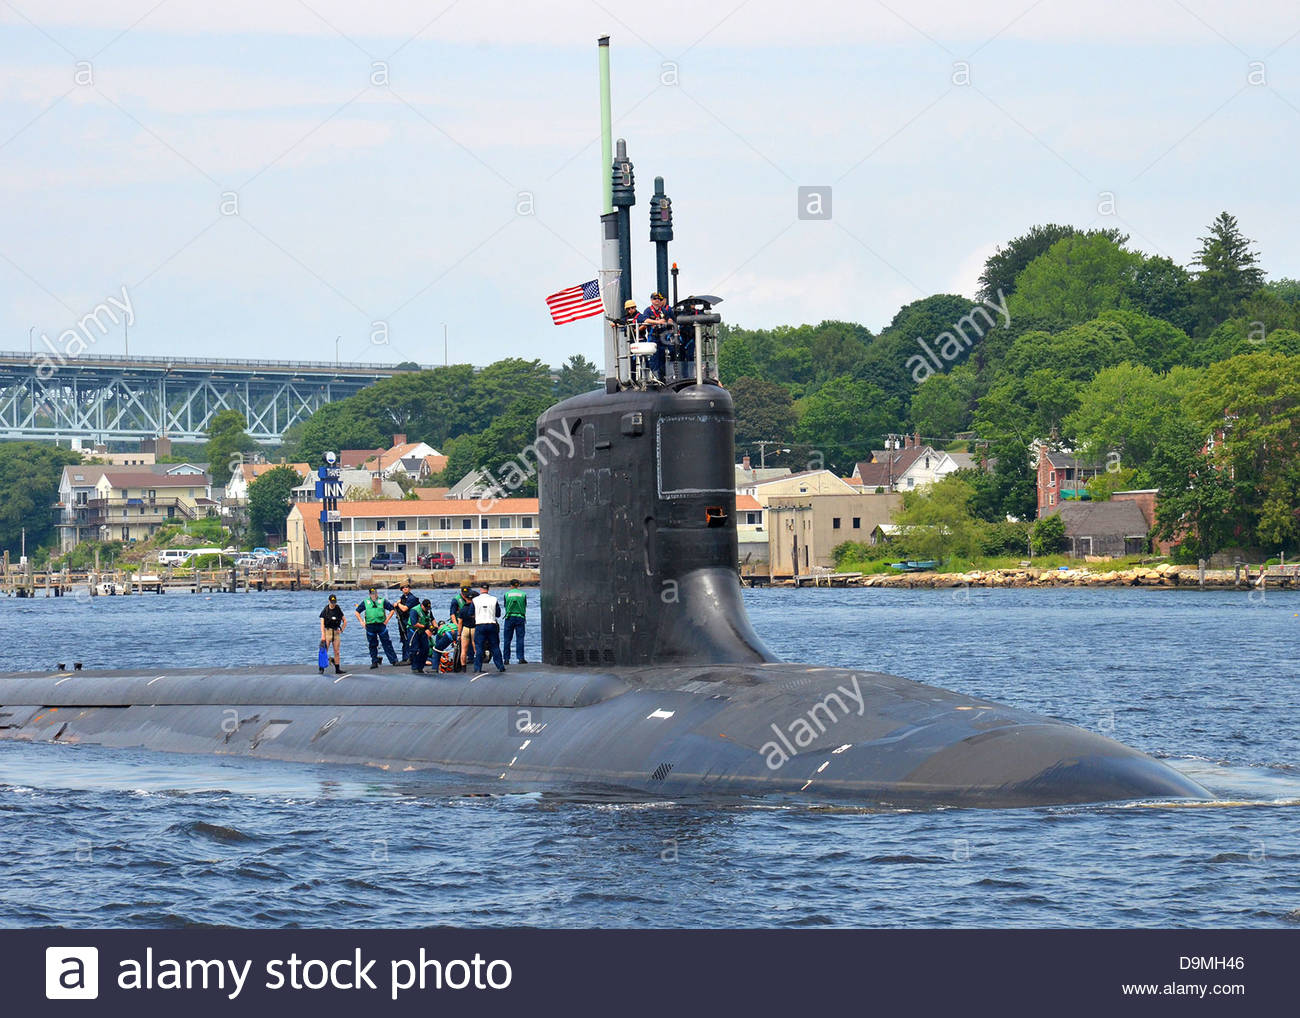 us-navy-virginia-class-attack-submarine-uss-missouri-transits-the-D9MH46.jpg